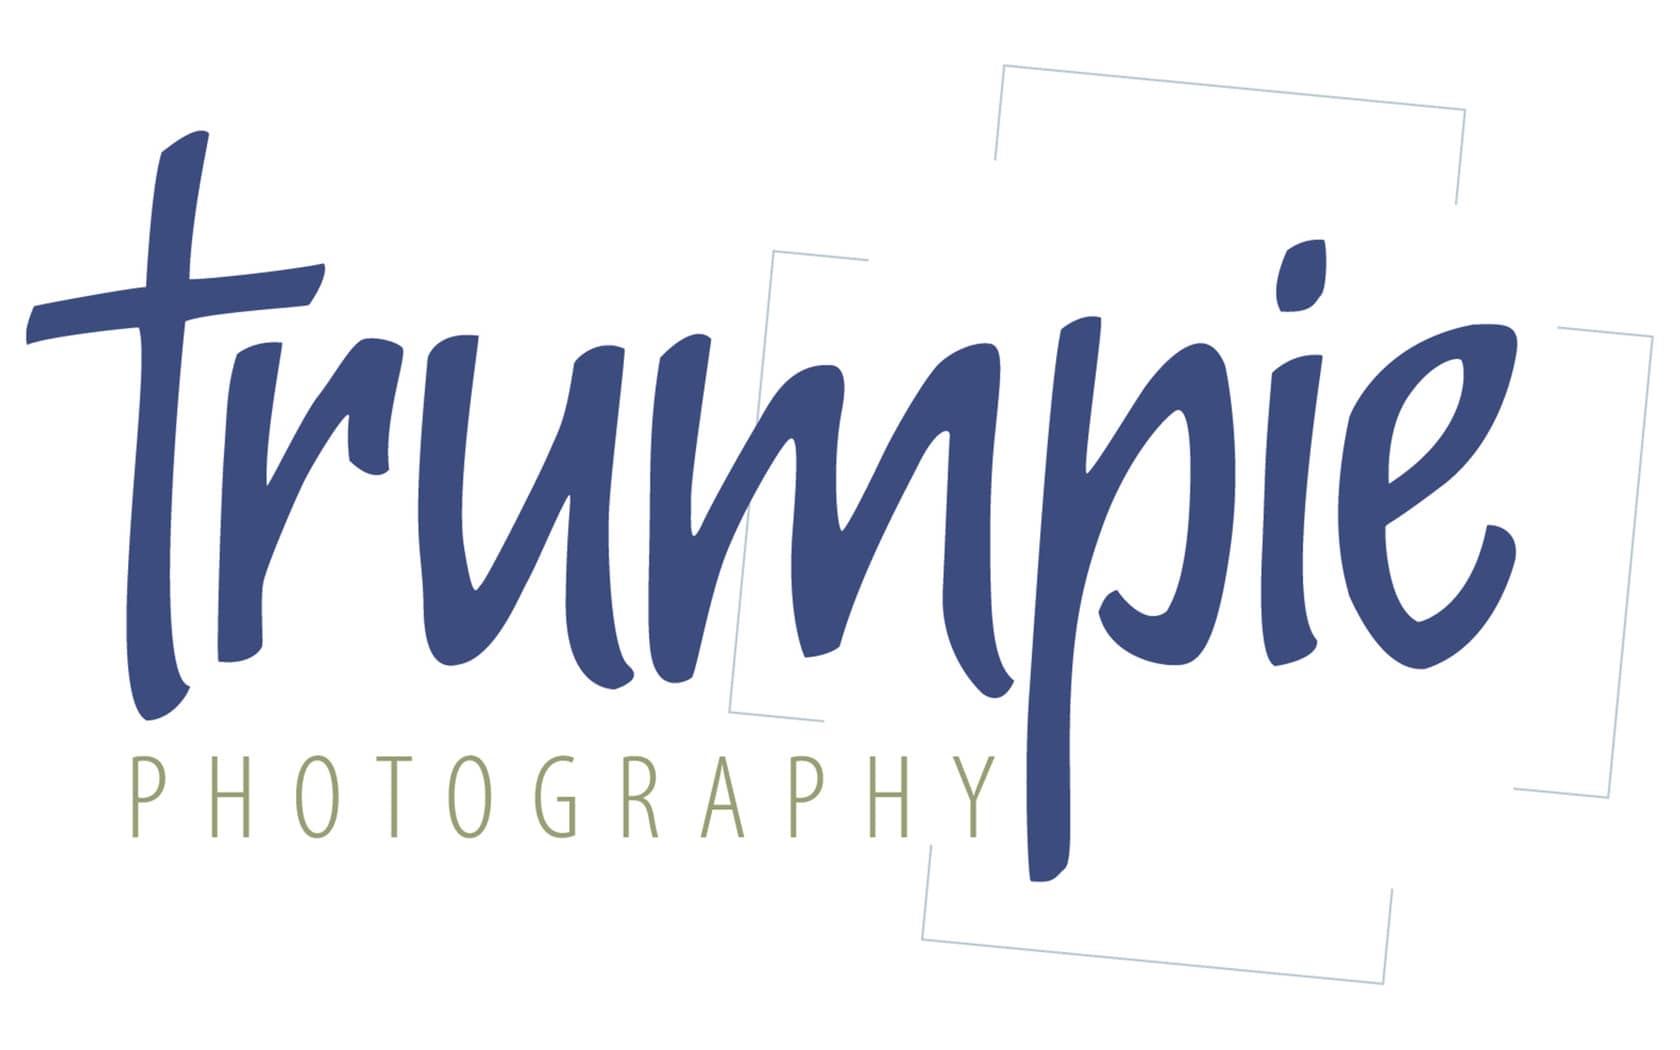 Trumpie photography logo